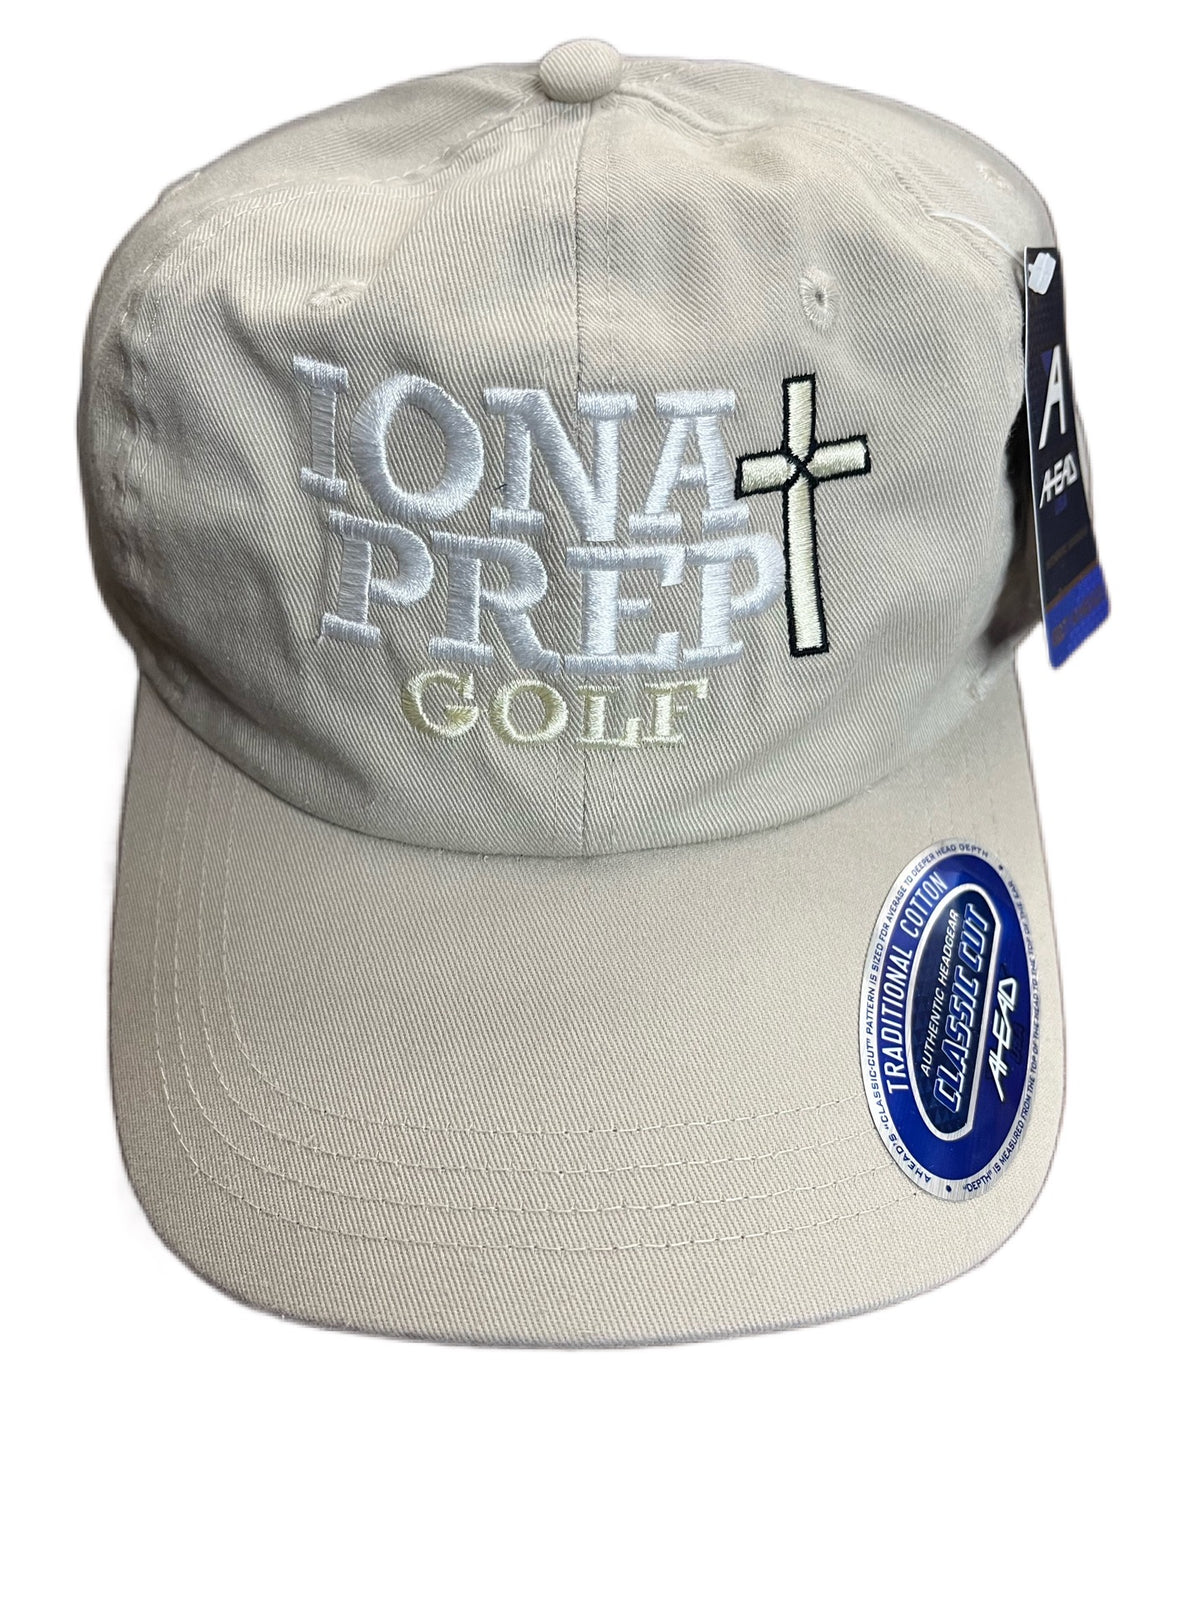 Hat- Iona Prep Sports